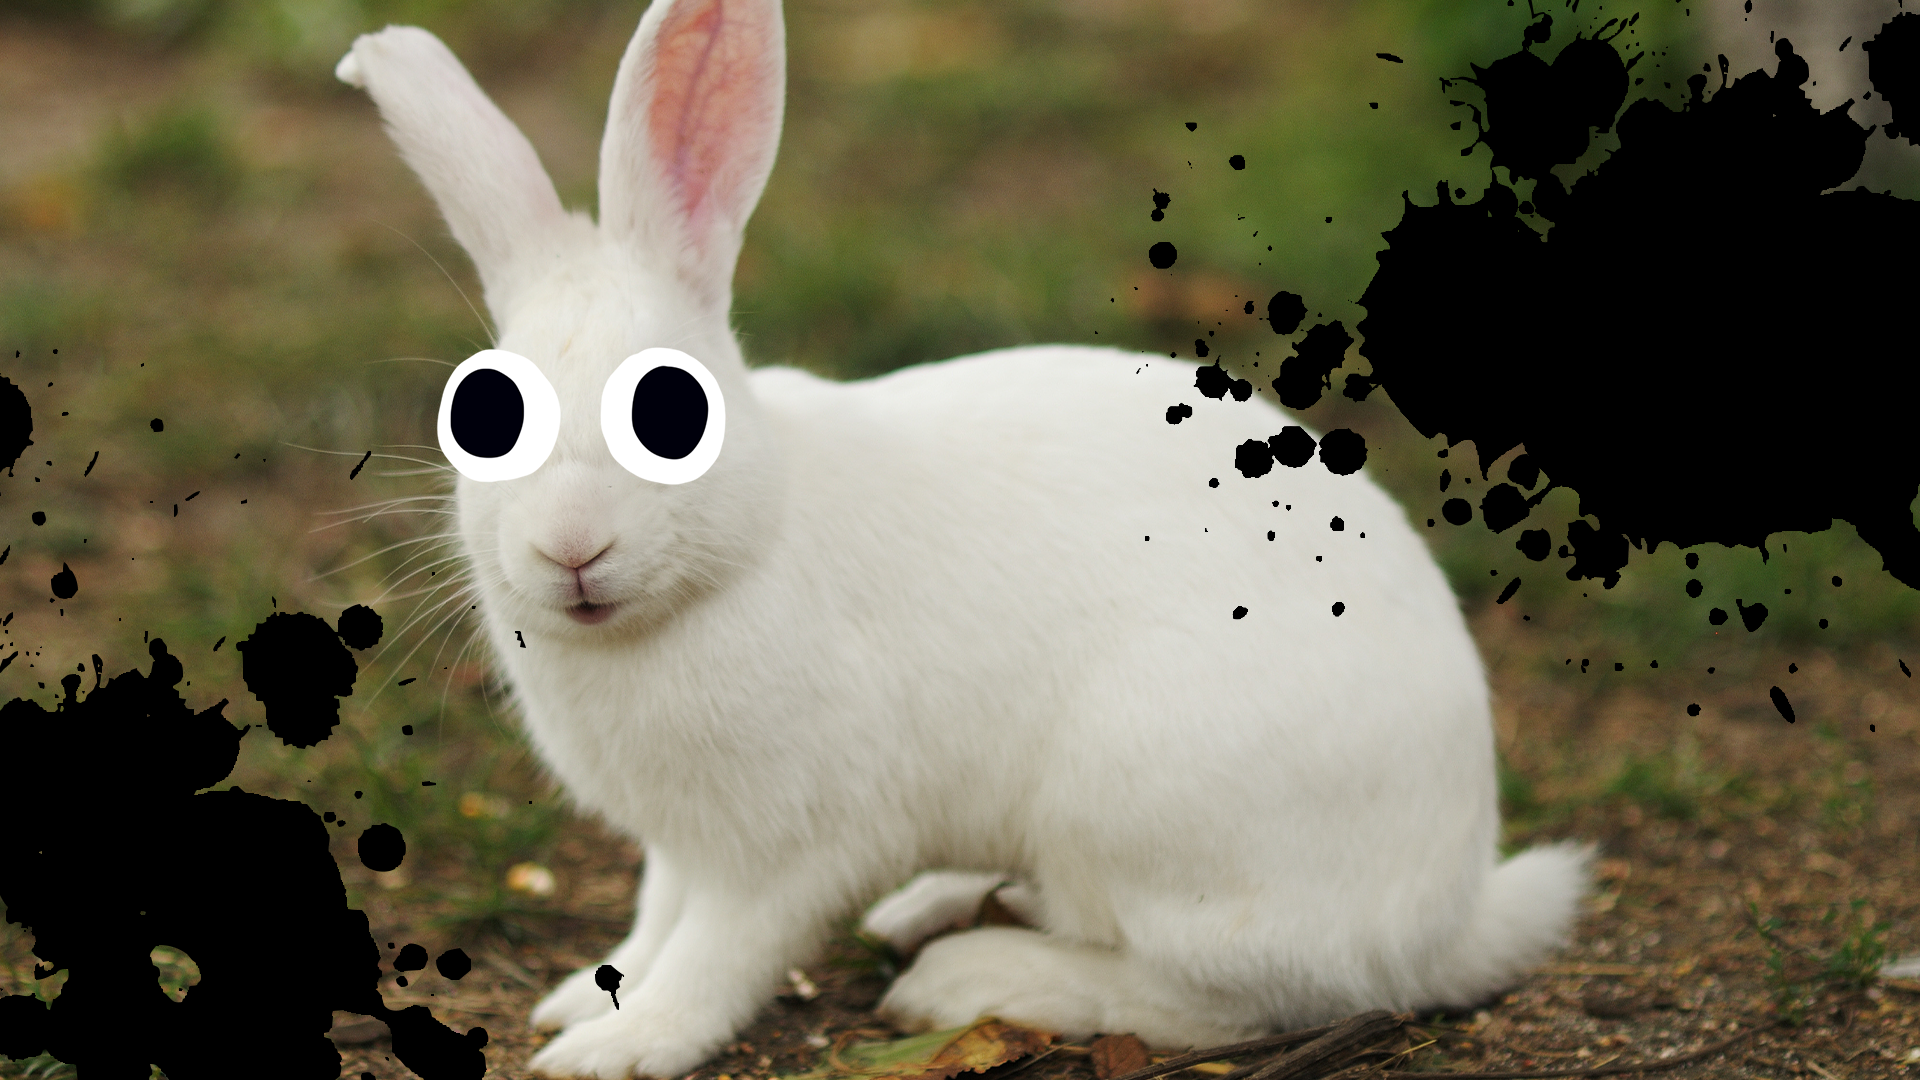 White rabbit with black splats